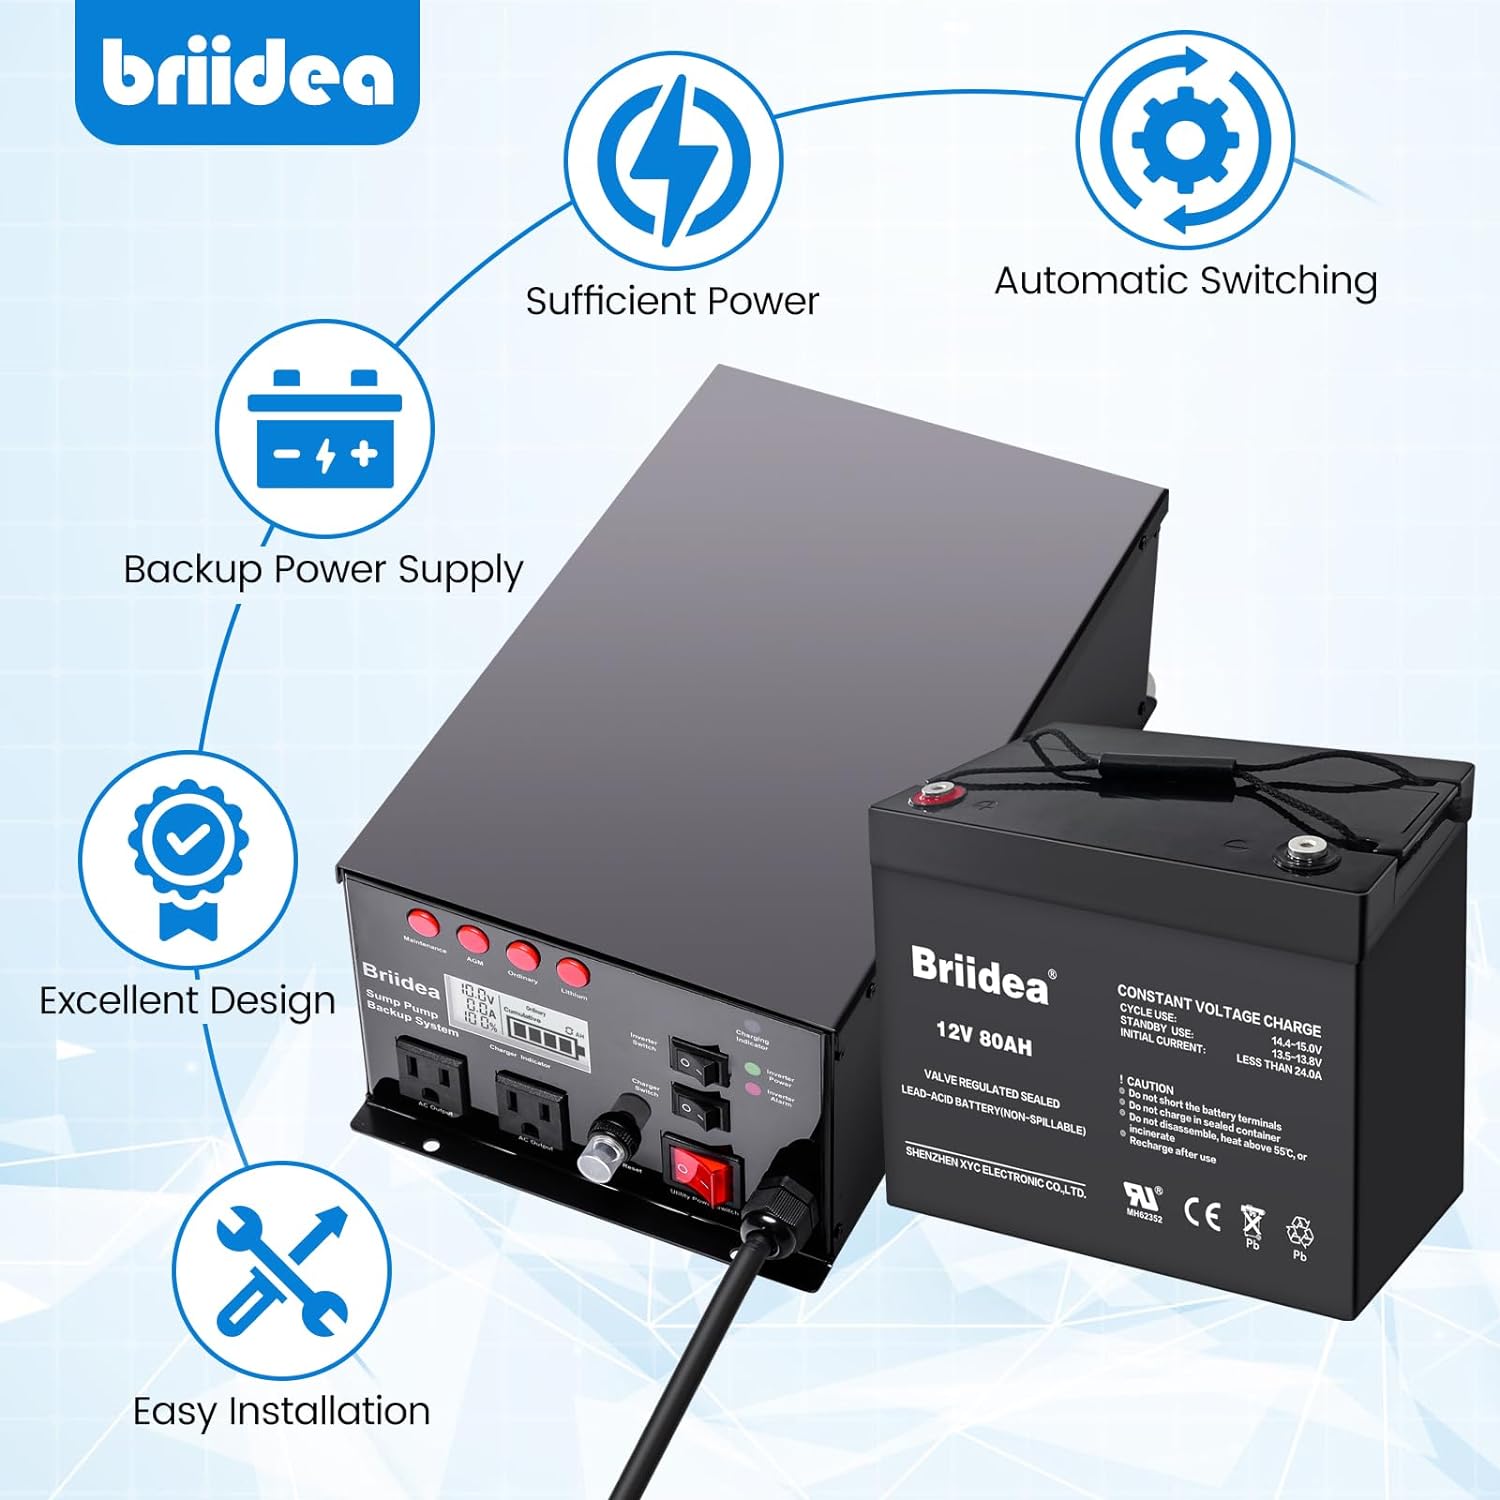 Briidea 1500W Sump Pump Battery Backup System with 12V 80AH Lead-acid Battery